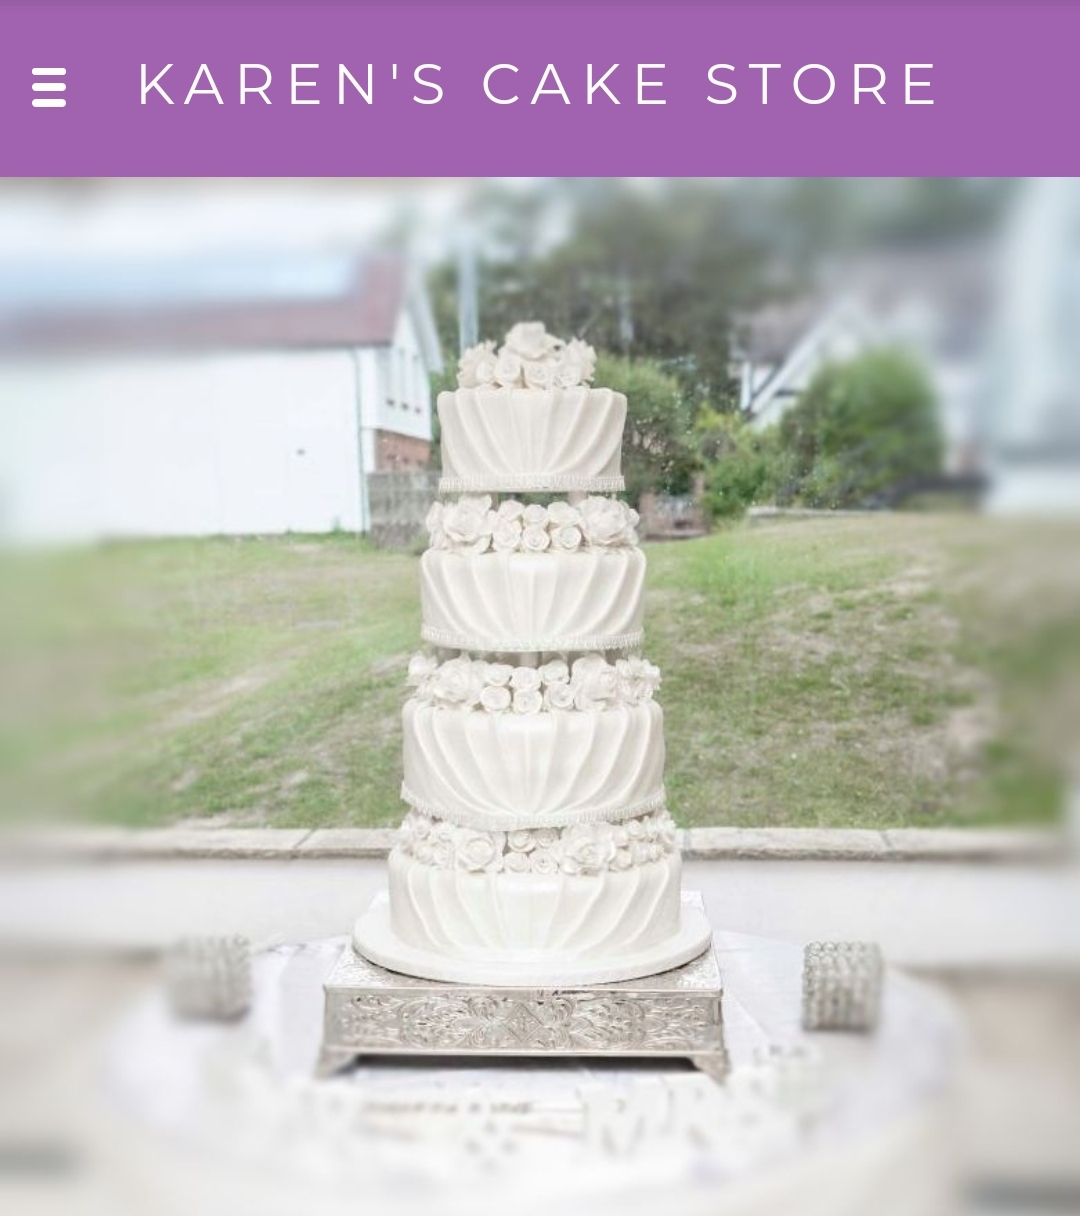 Karen's Cake Store